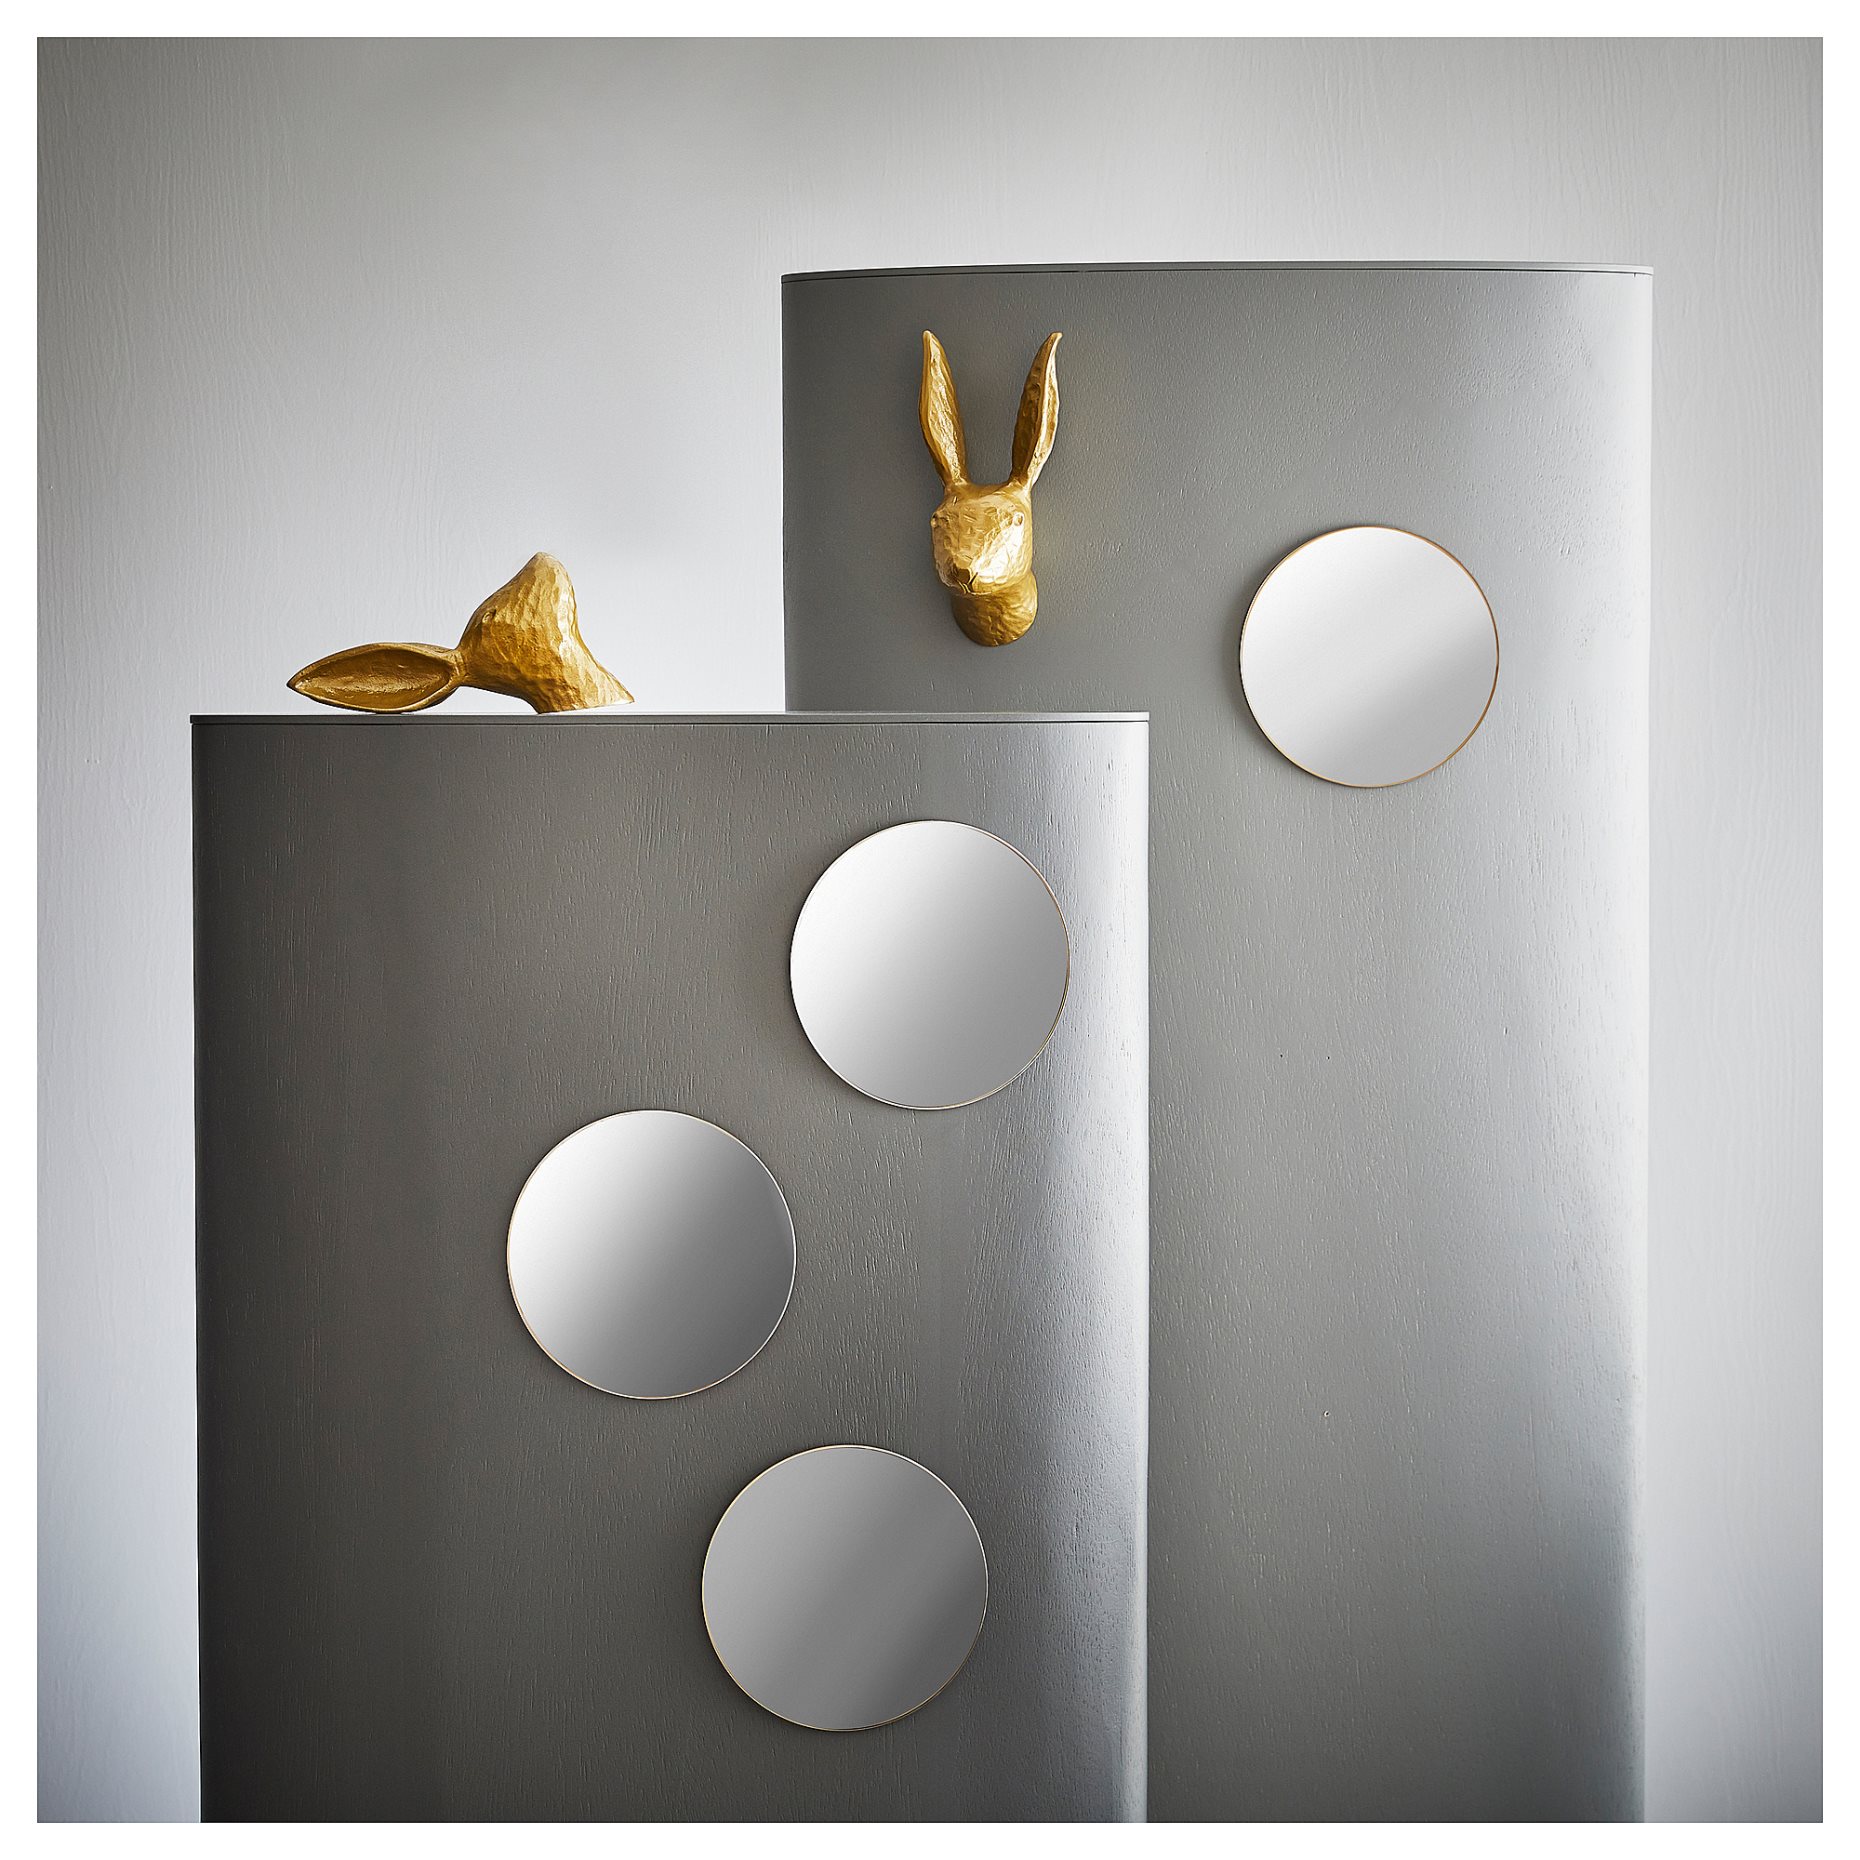 FÄRGEK, decorative mirror/4 pack, 20 cm, 005.171.21